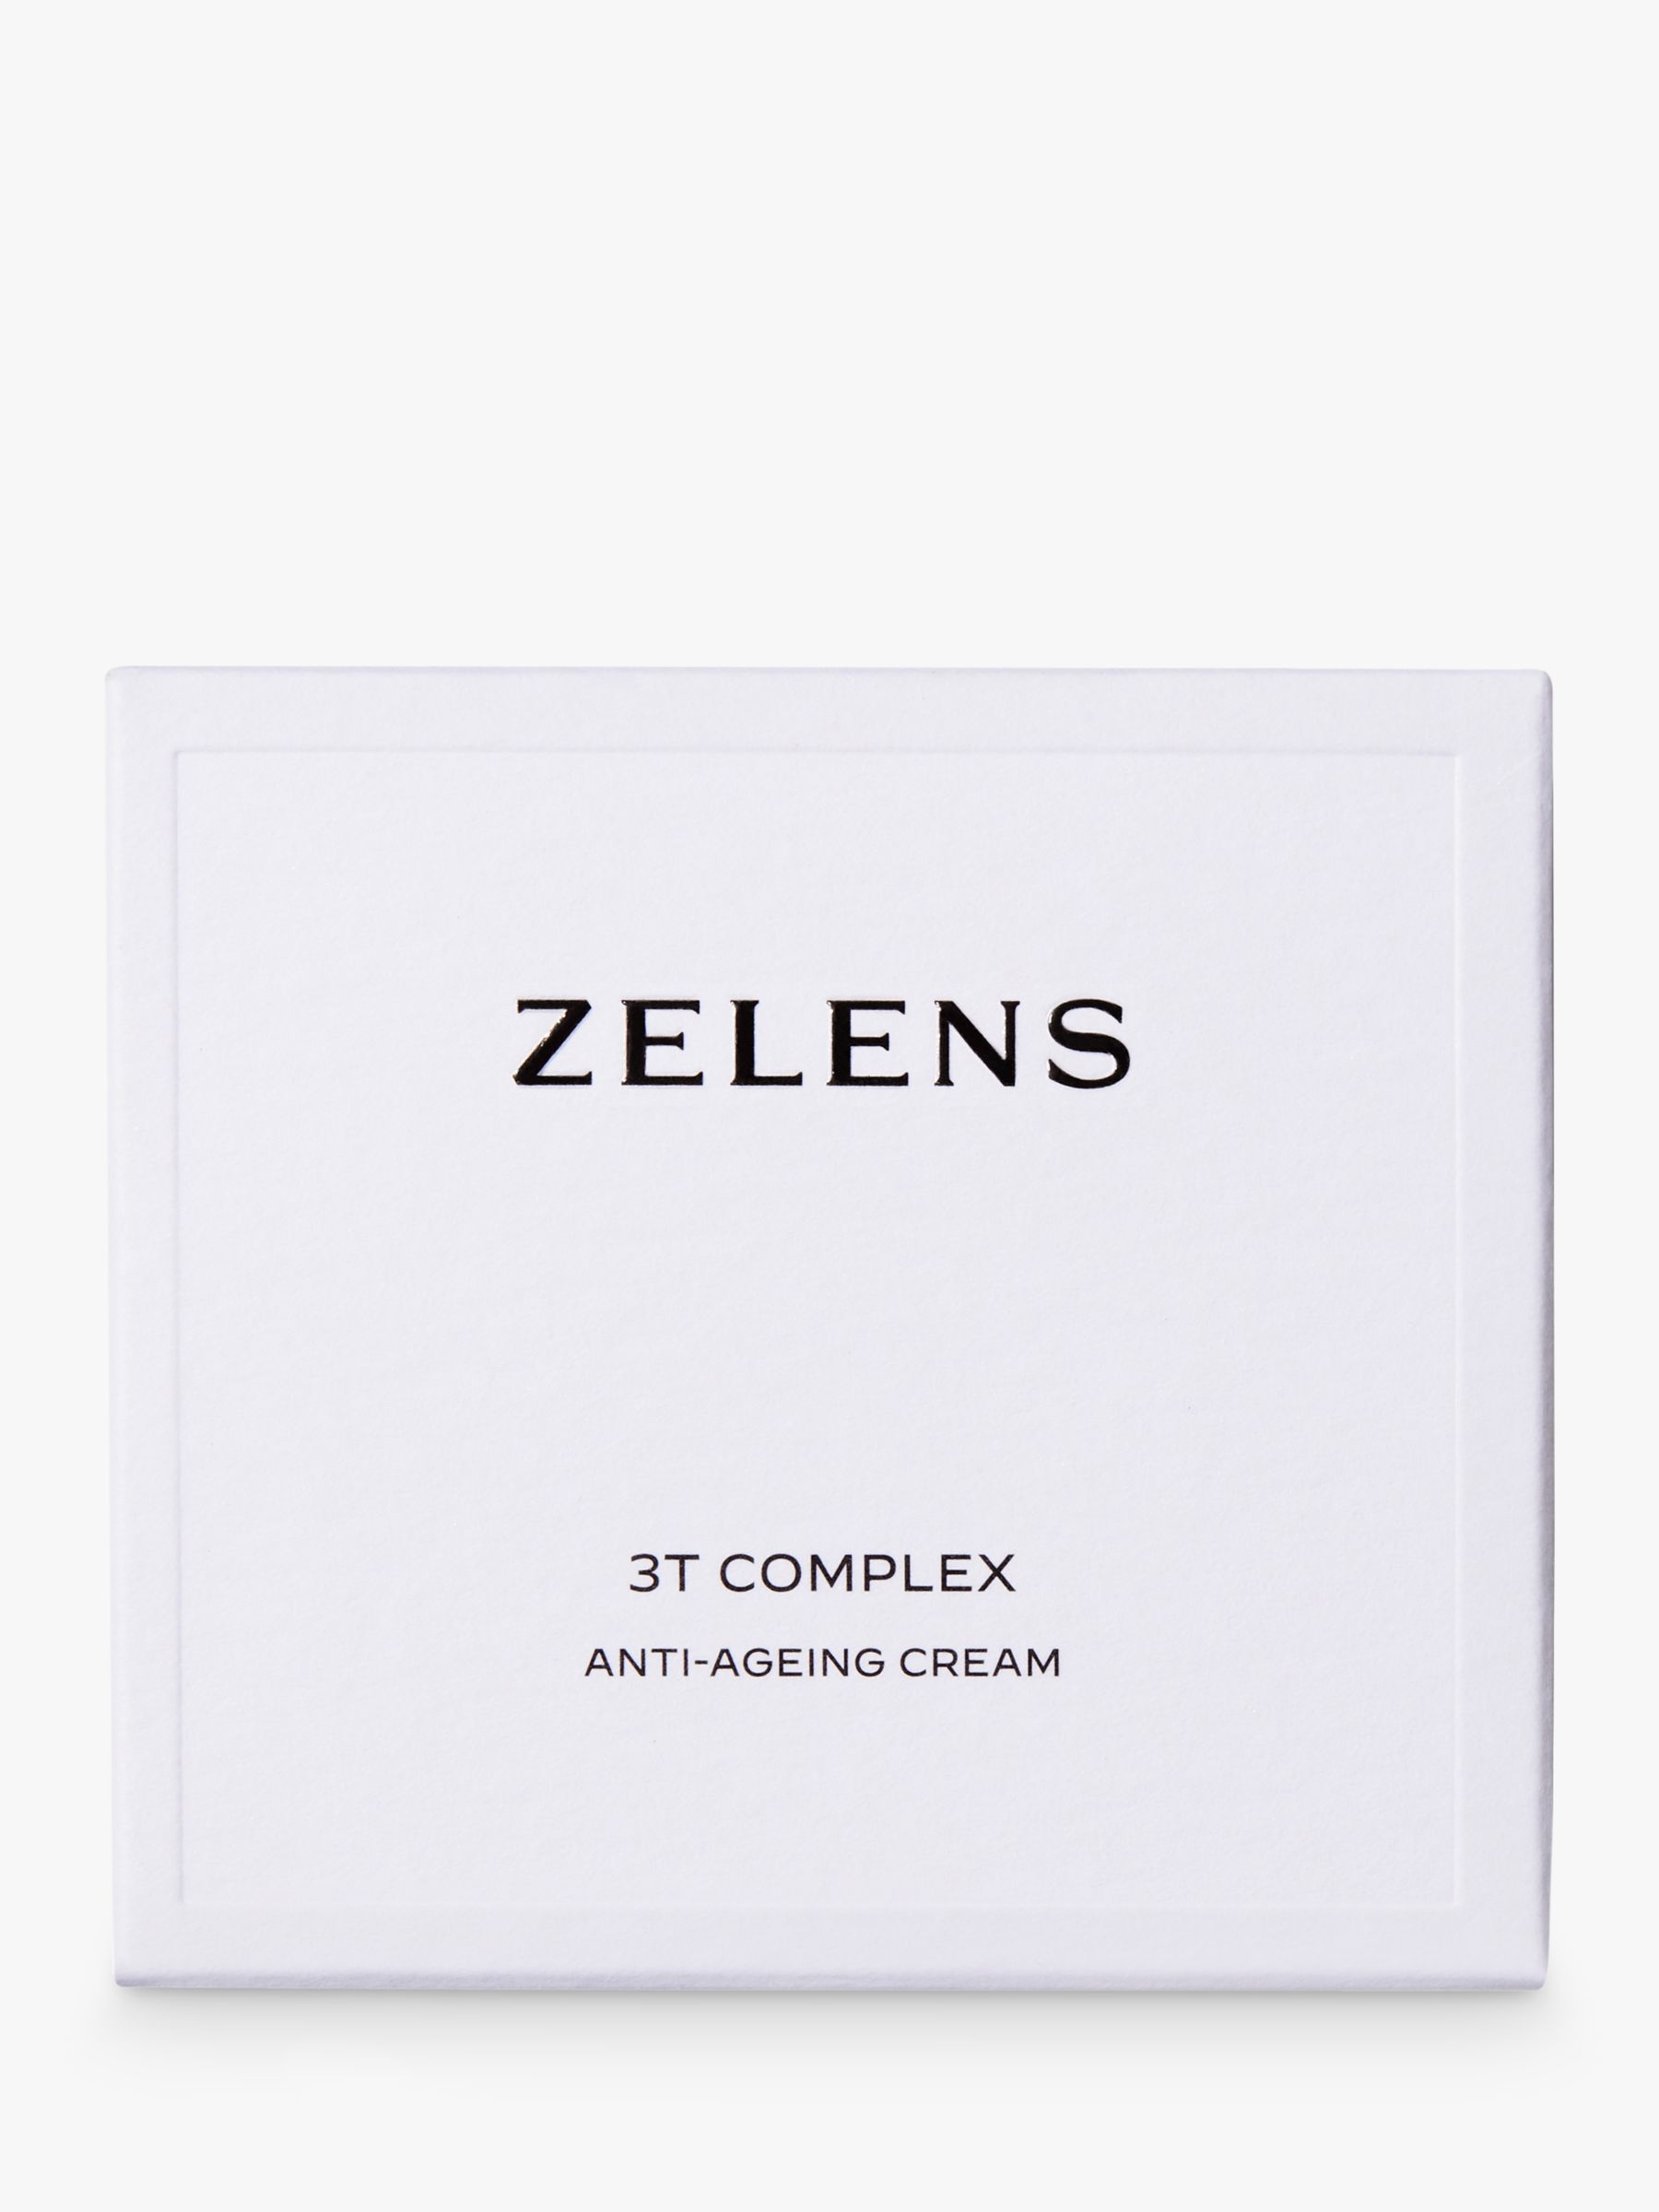 Zelens 3T Complex Anti-Ageing Cream, 50ml 2